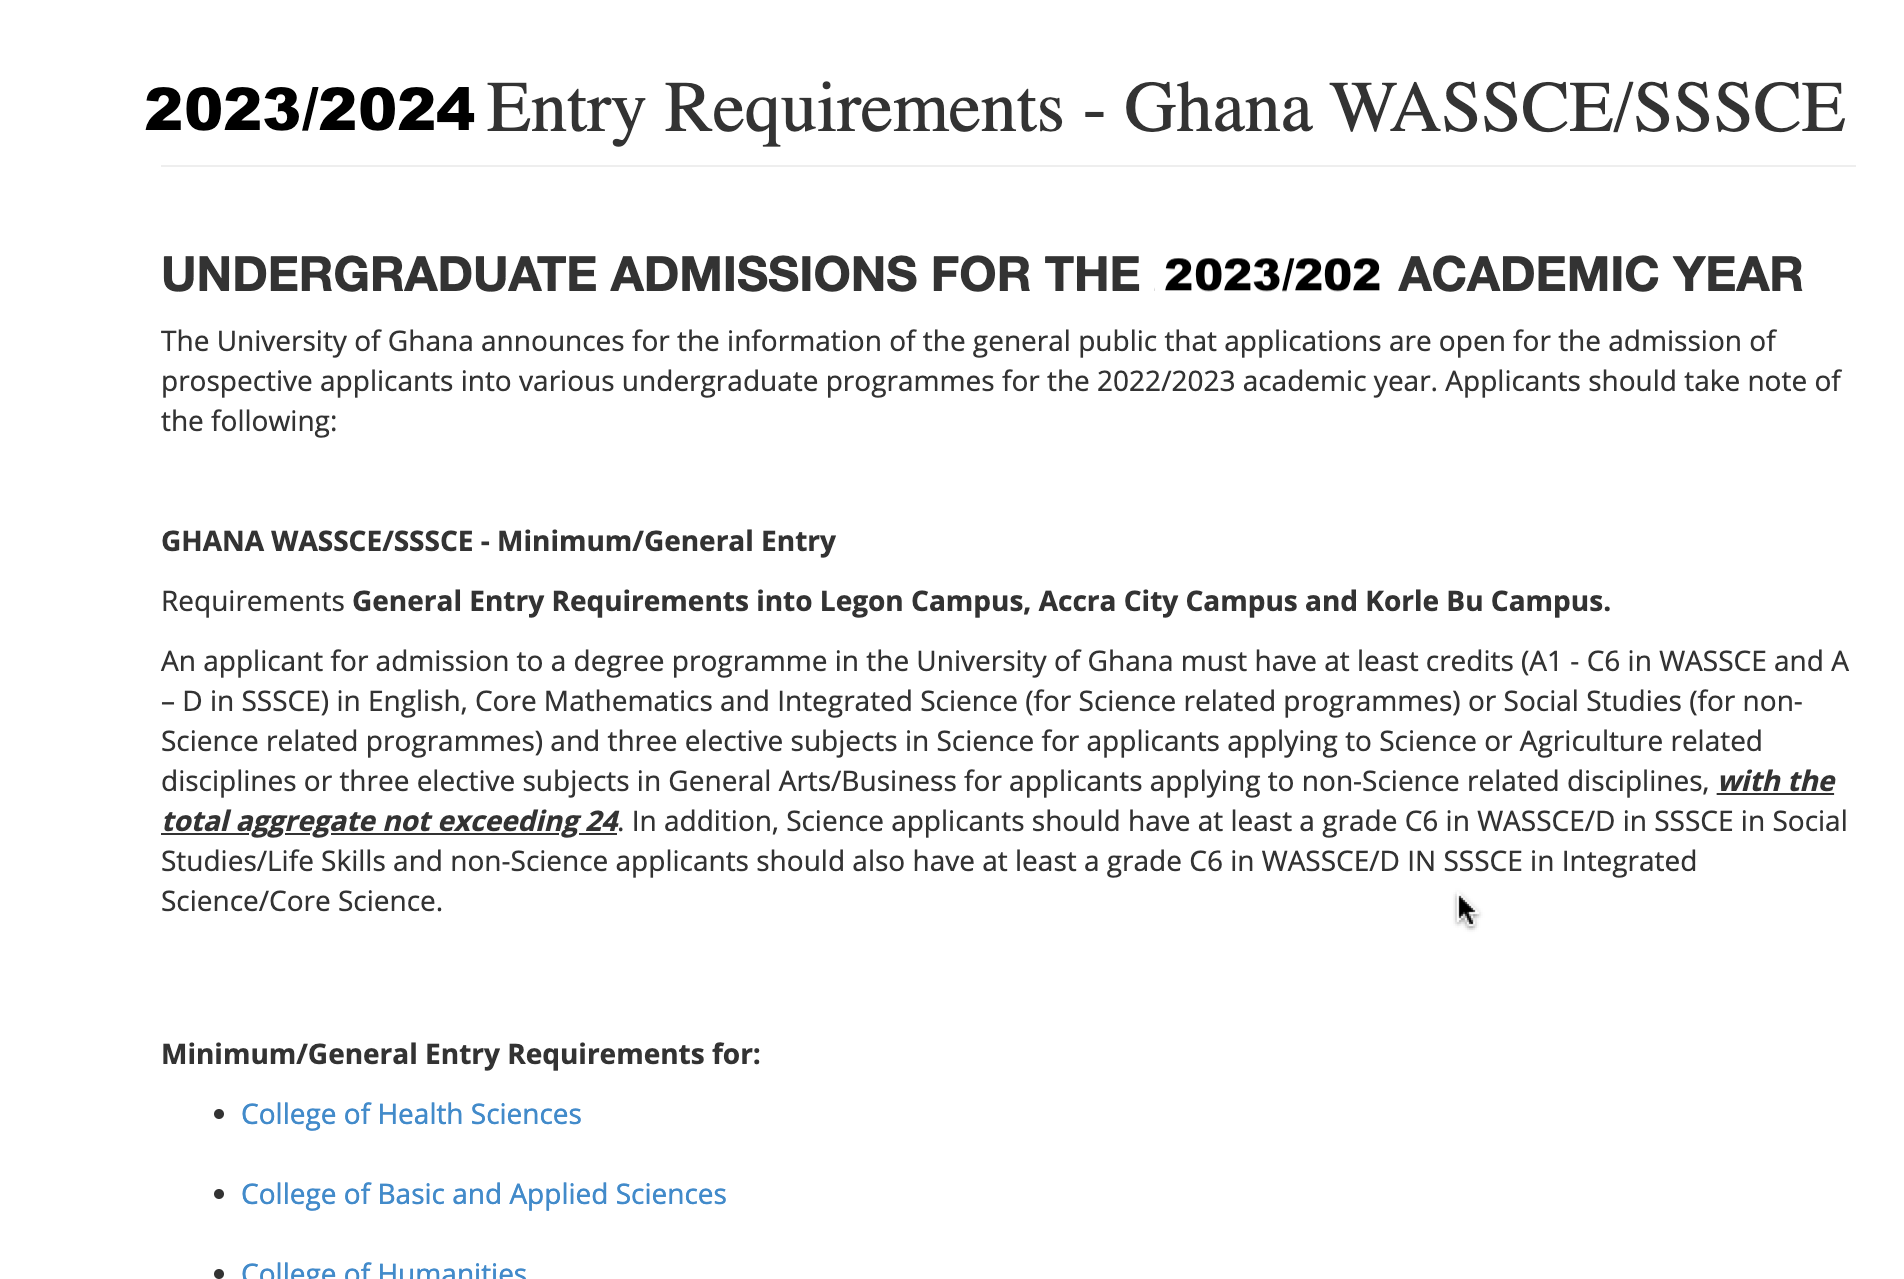 University of Ghana (UG) Admission Requirements 2023/2024